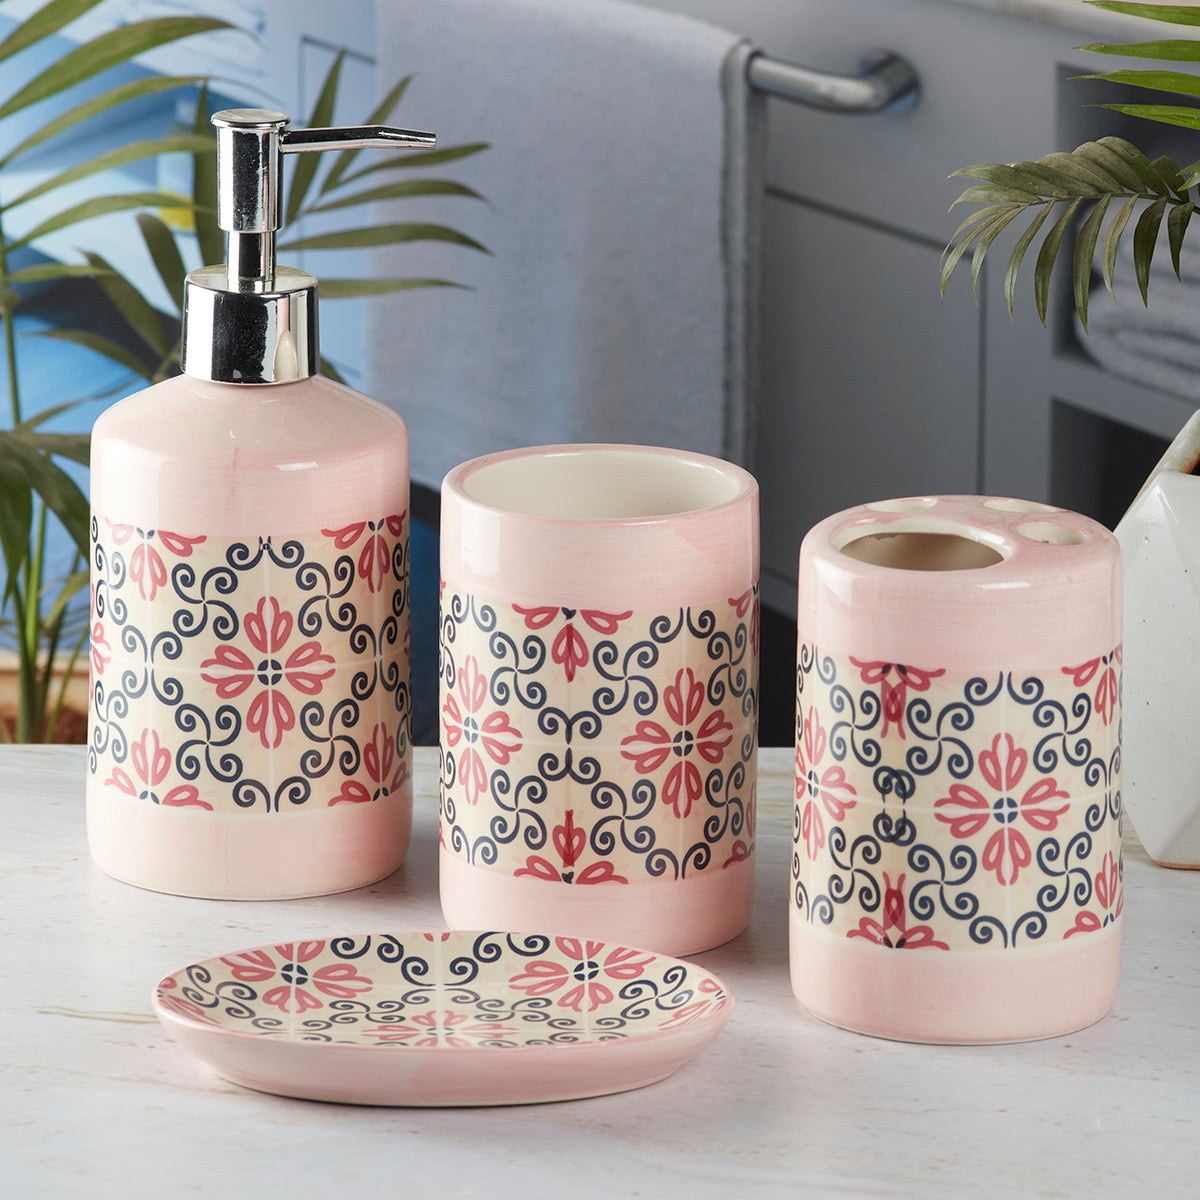 Ceramic Bathroom Accessories Set of 4 Bath Set with Soap Dispenser (8118)